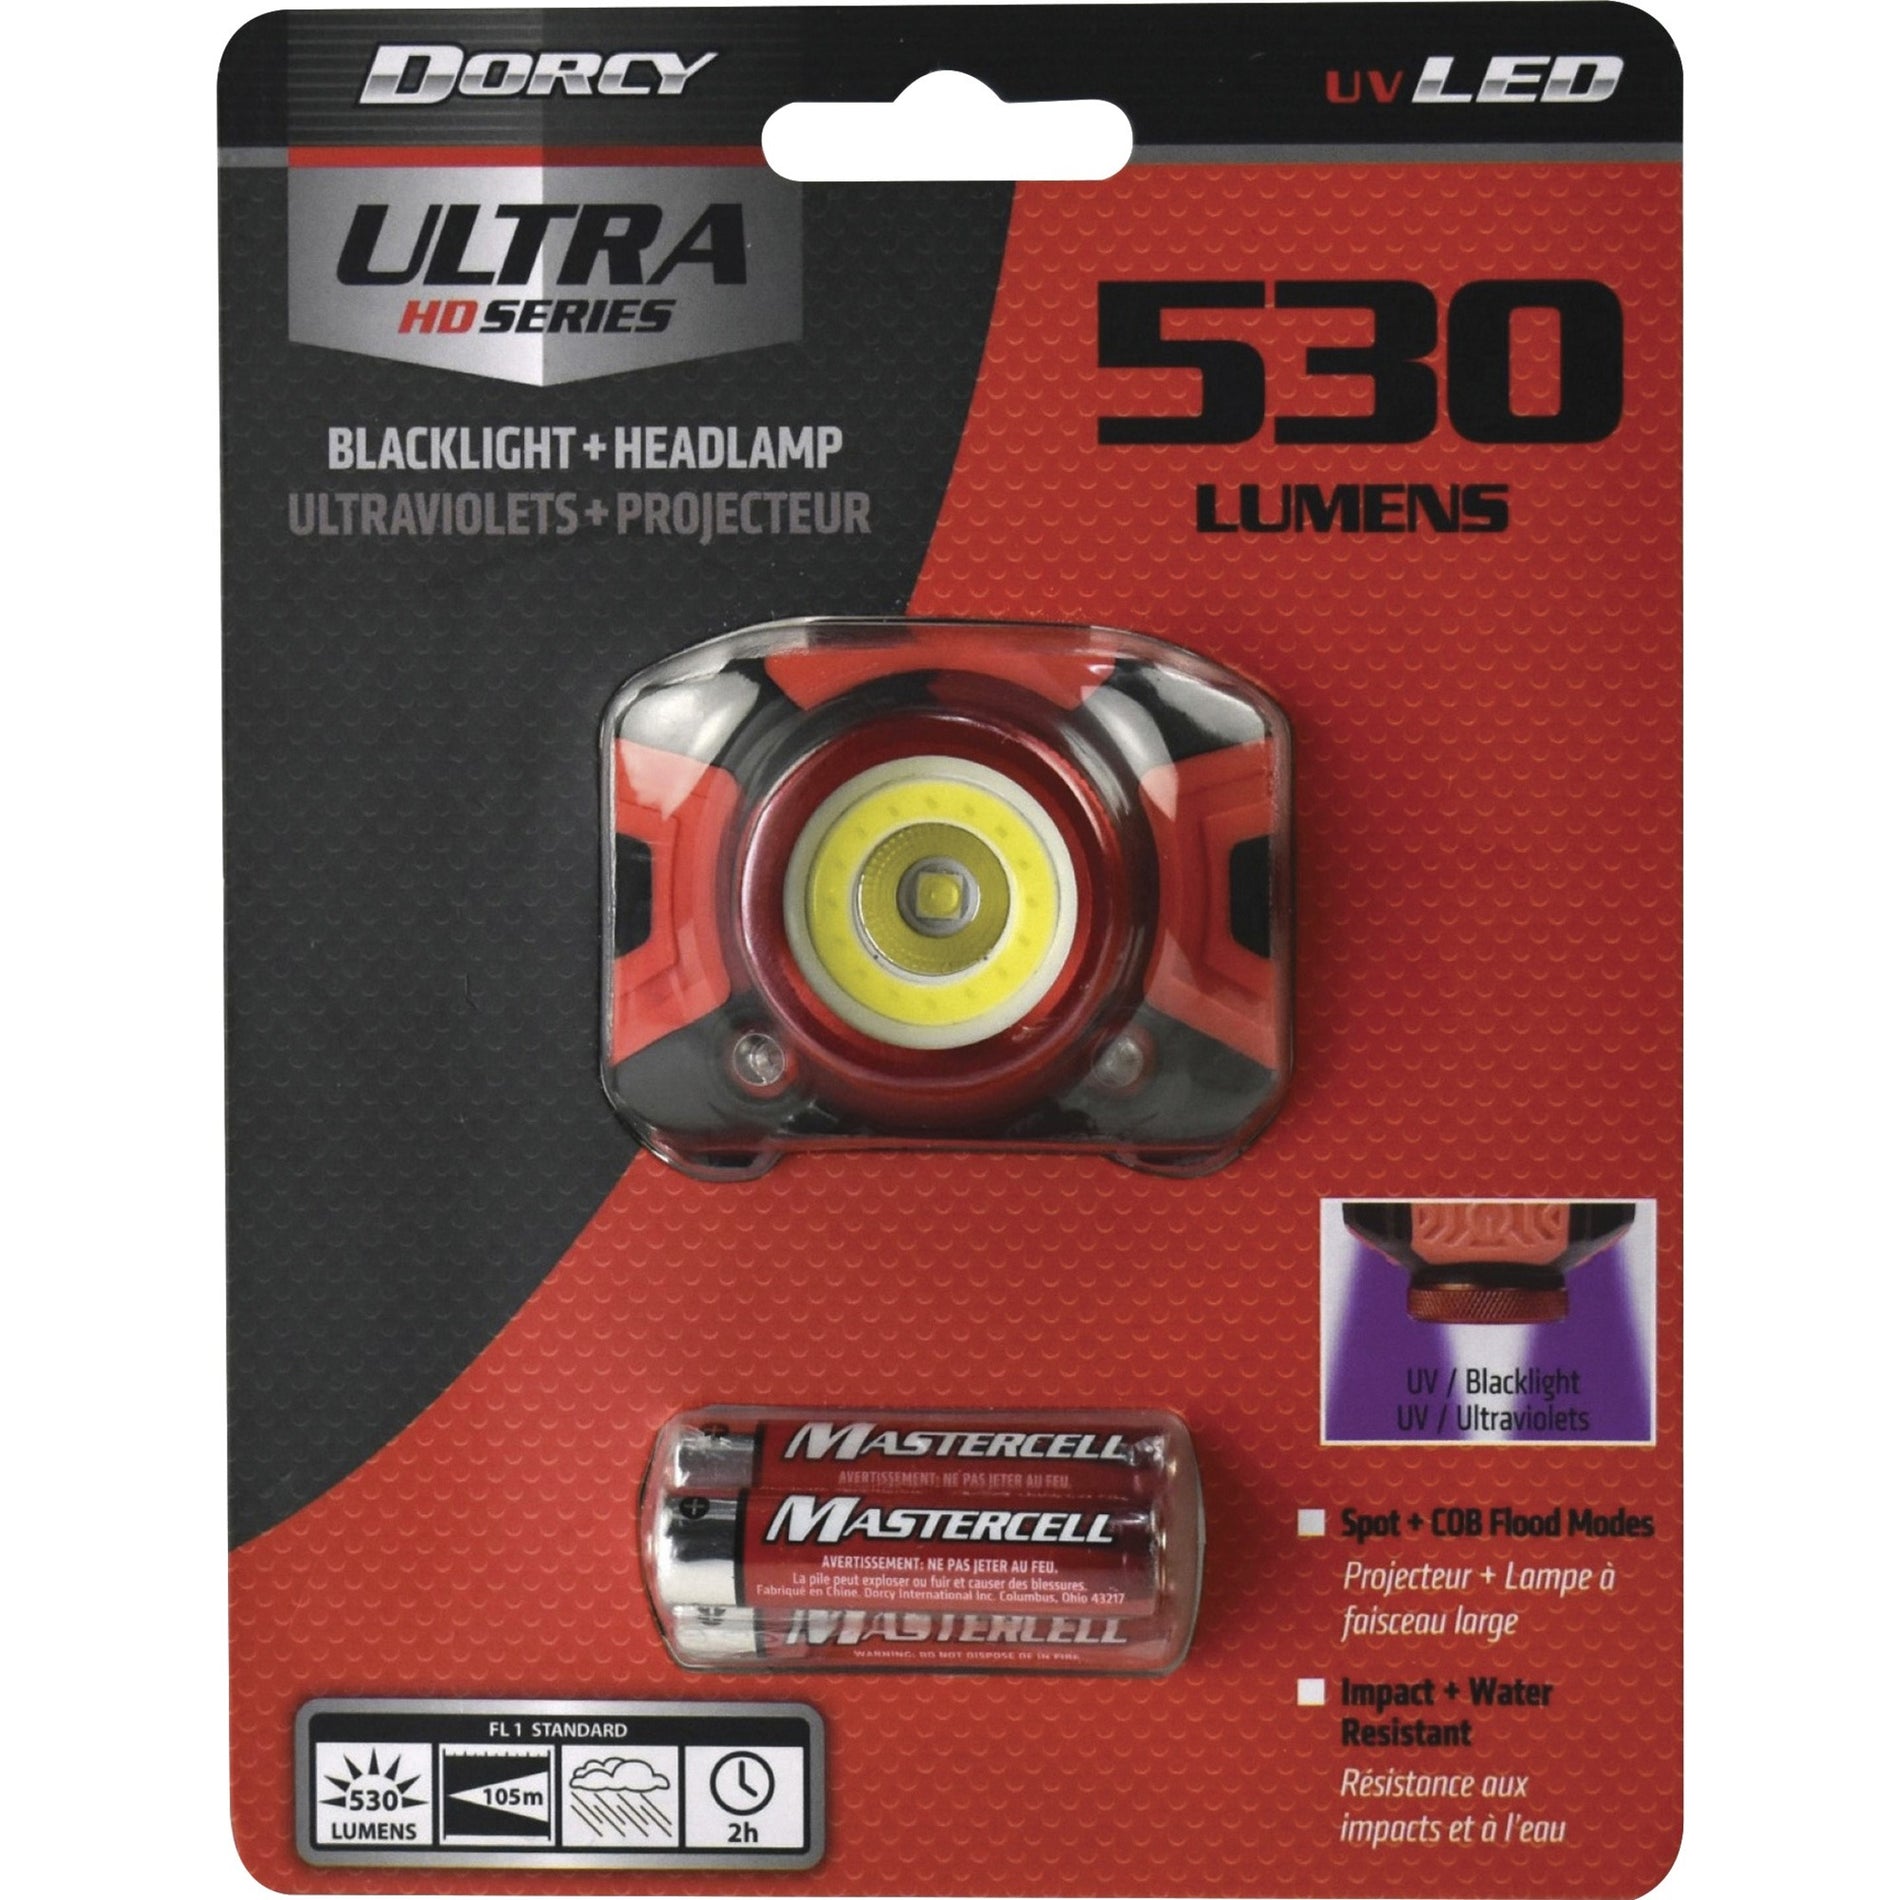 Dorcy 414335 Ultra HD 530 Lumen Headlamp, Water Resistant, AAA Battery Powered